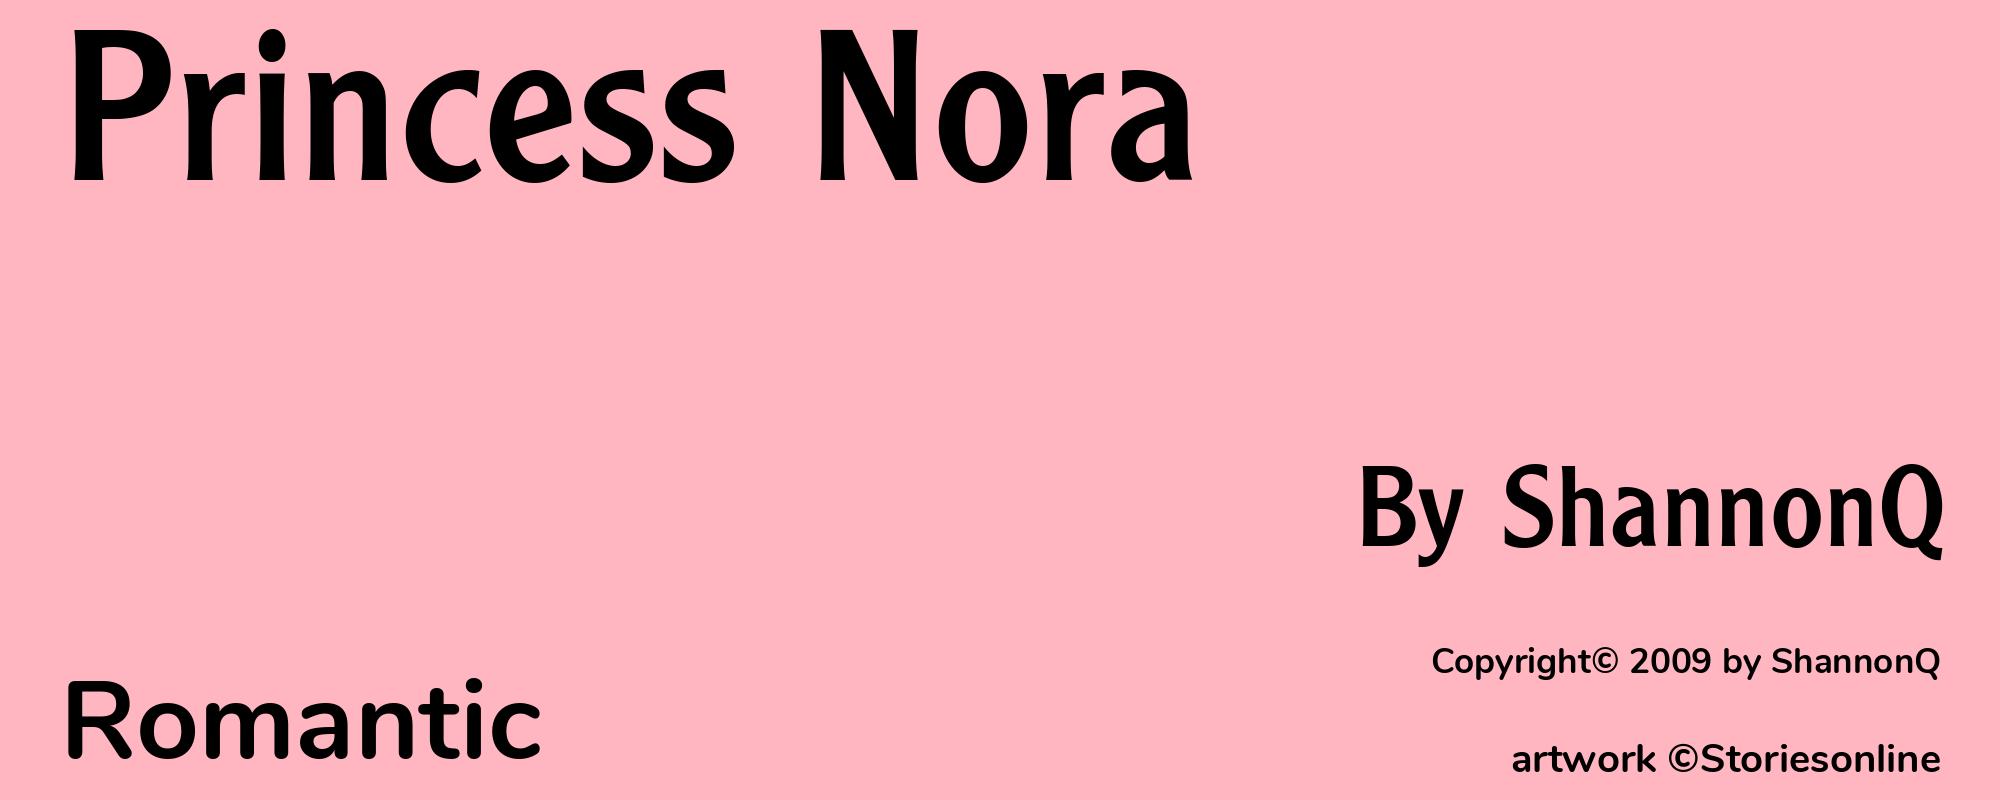 Princess Nora - Cover